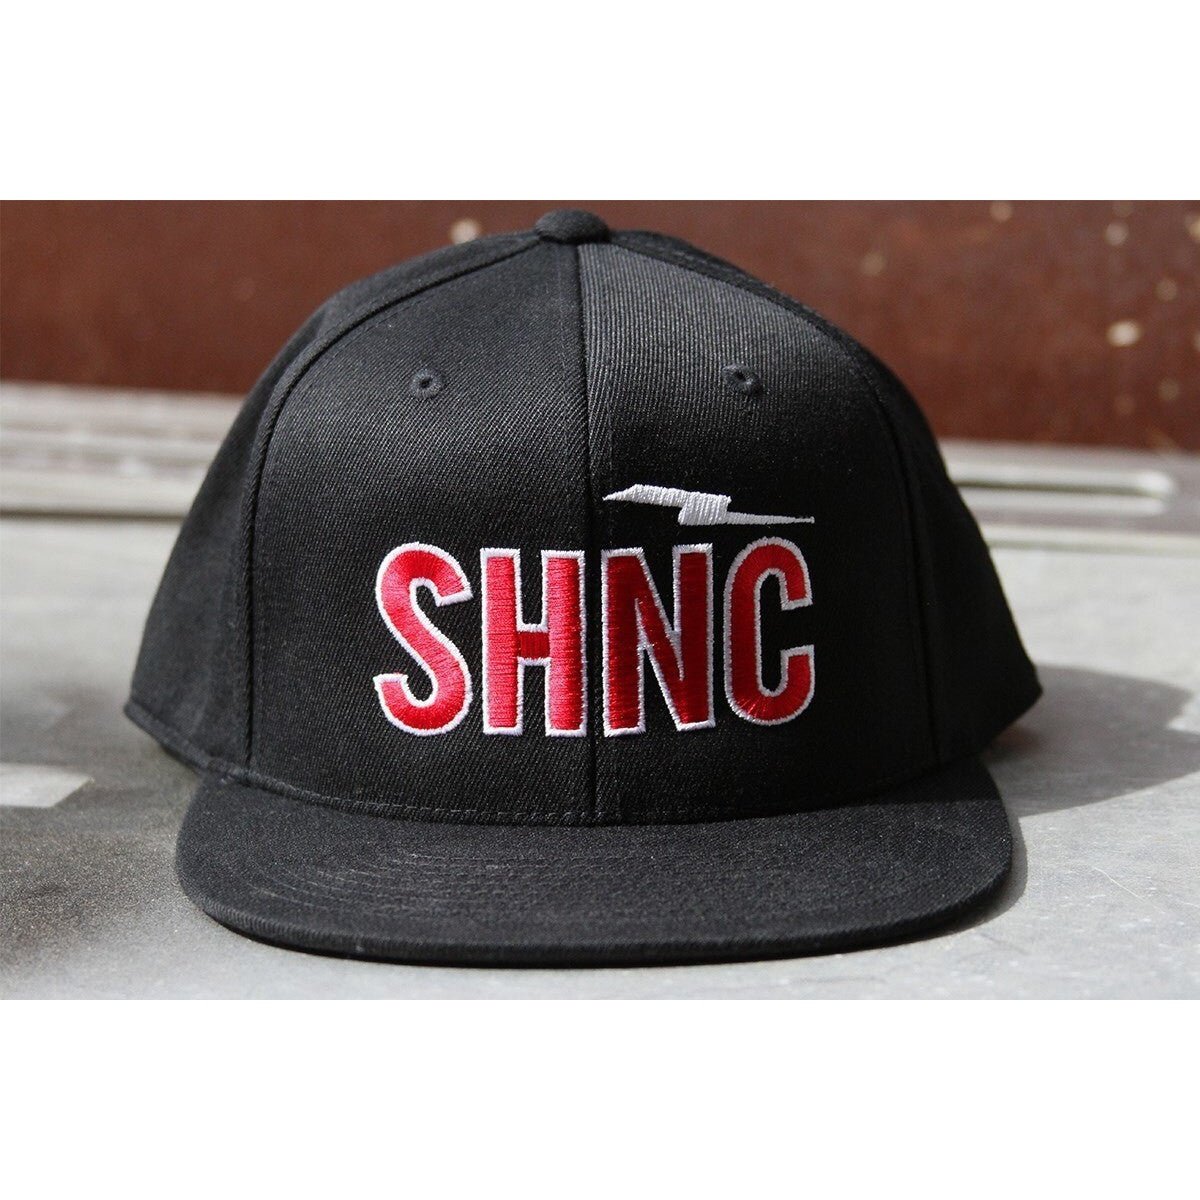 SHNC Hat